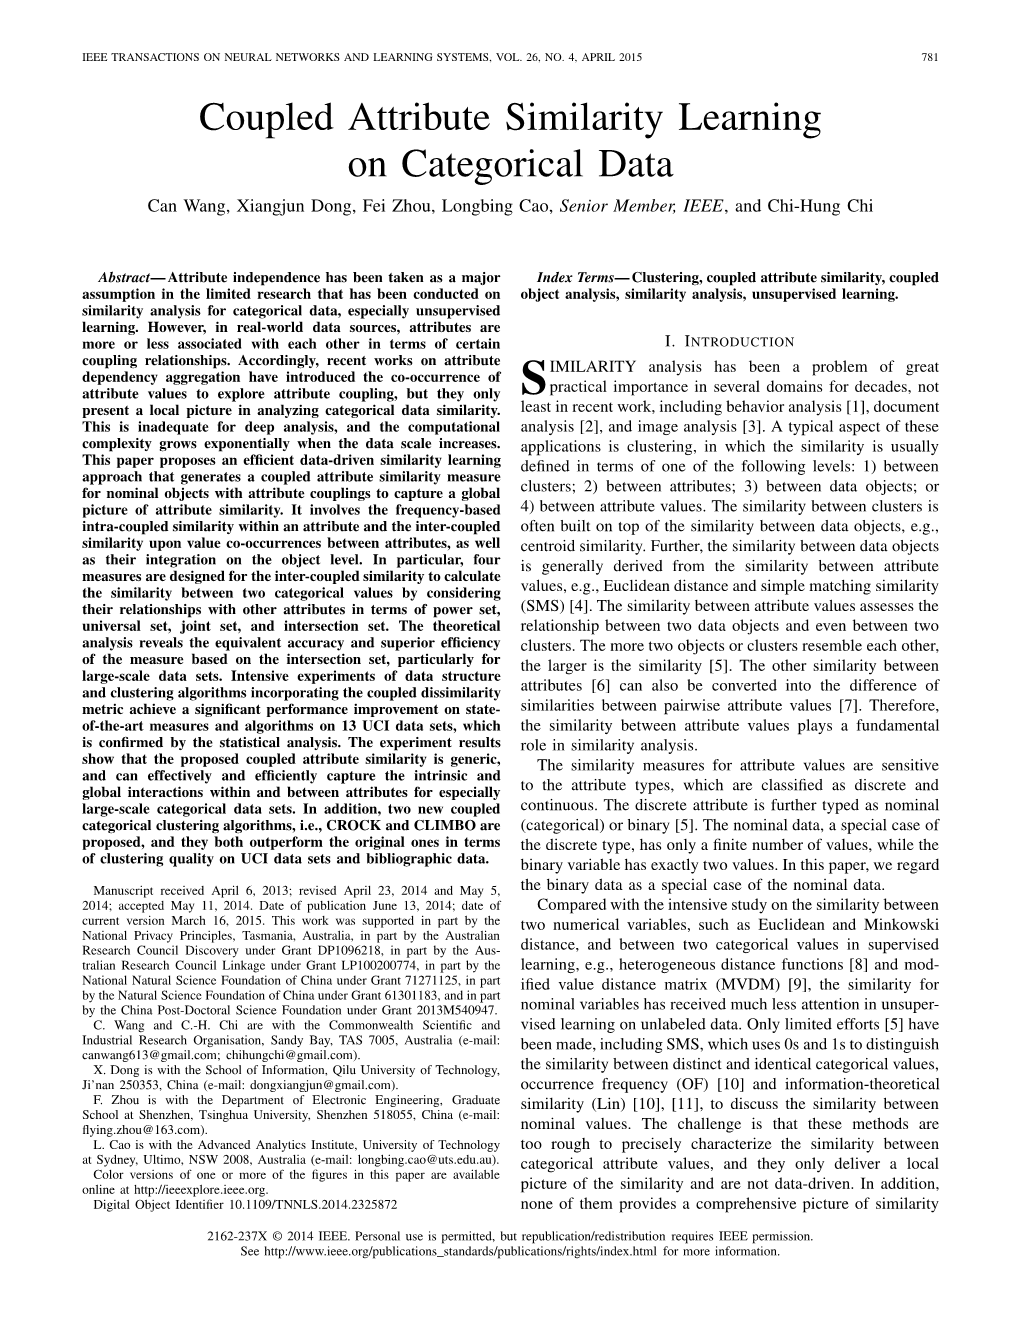 Coupled Attribute Similarity Learning on Categorical Data Can Wang, Xiangjun Dong, Fei Zhou, Longbing Cao, Senior Member, IEEE, and Chi-Hung Chi